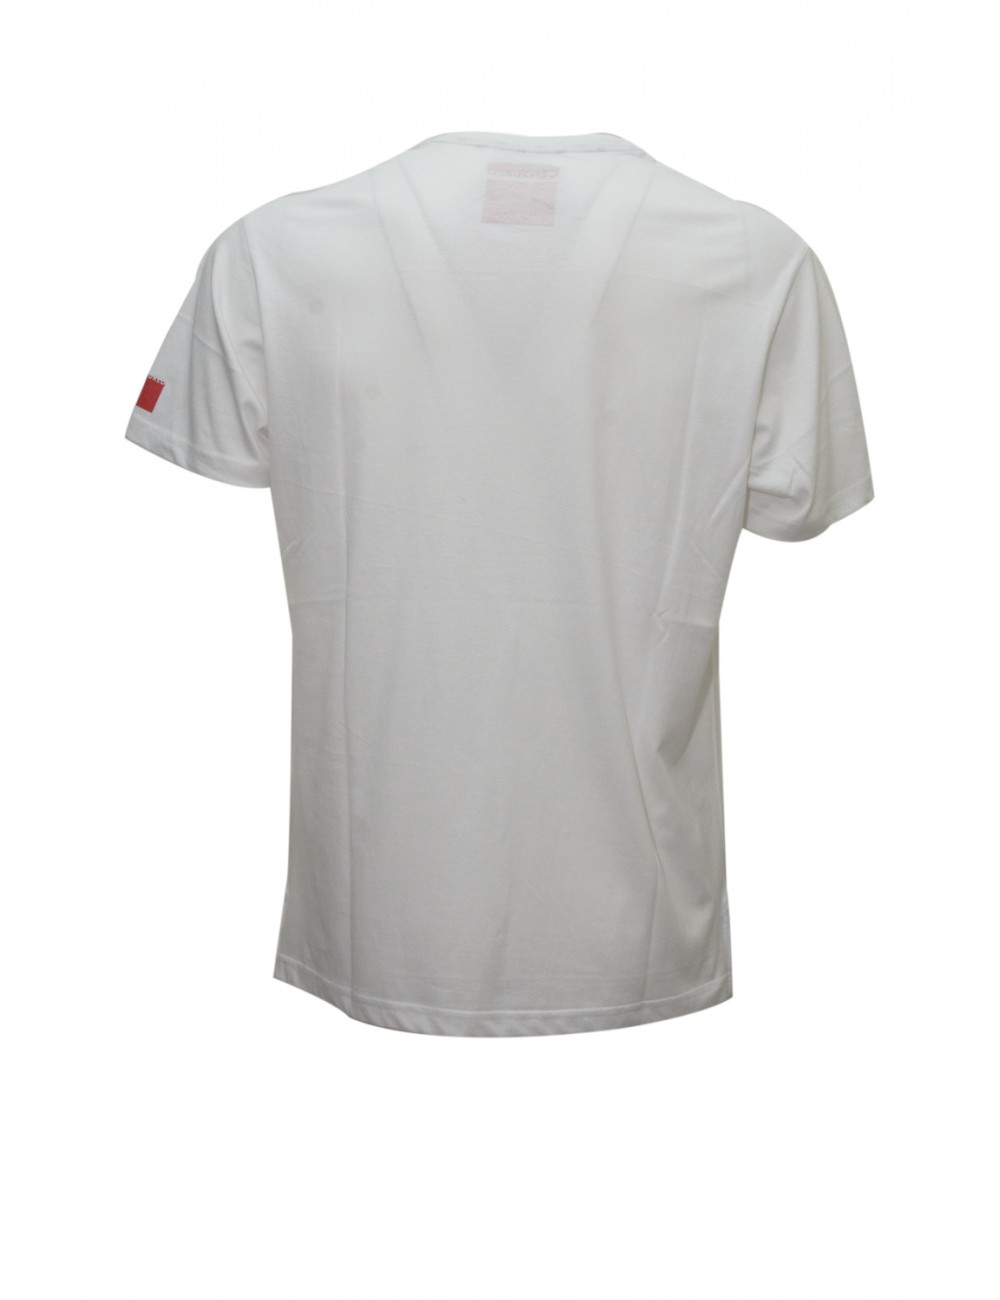 t-shirt censured UOMO BIANCA OFF WHITE - TM 3979 T JETE 00 vista frontale